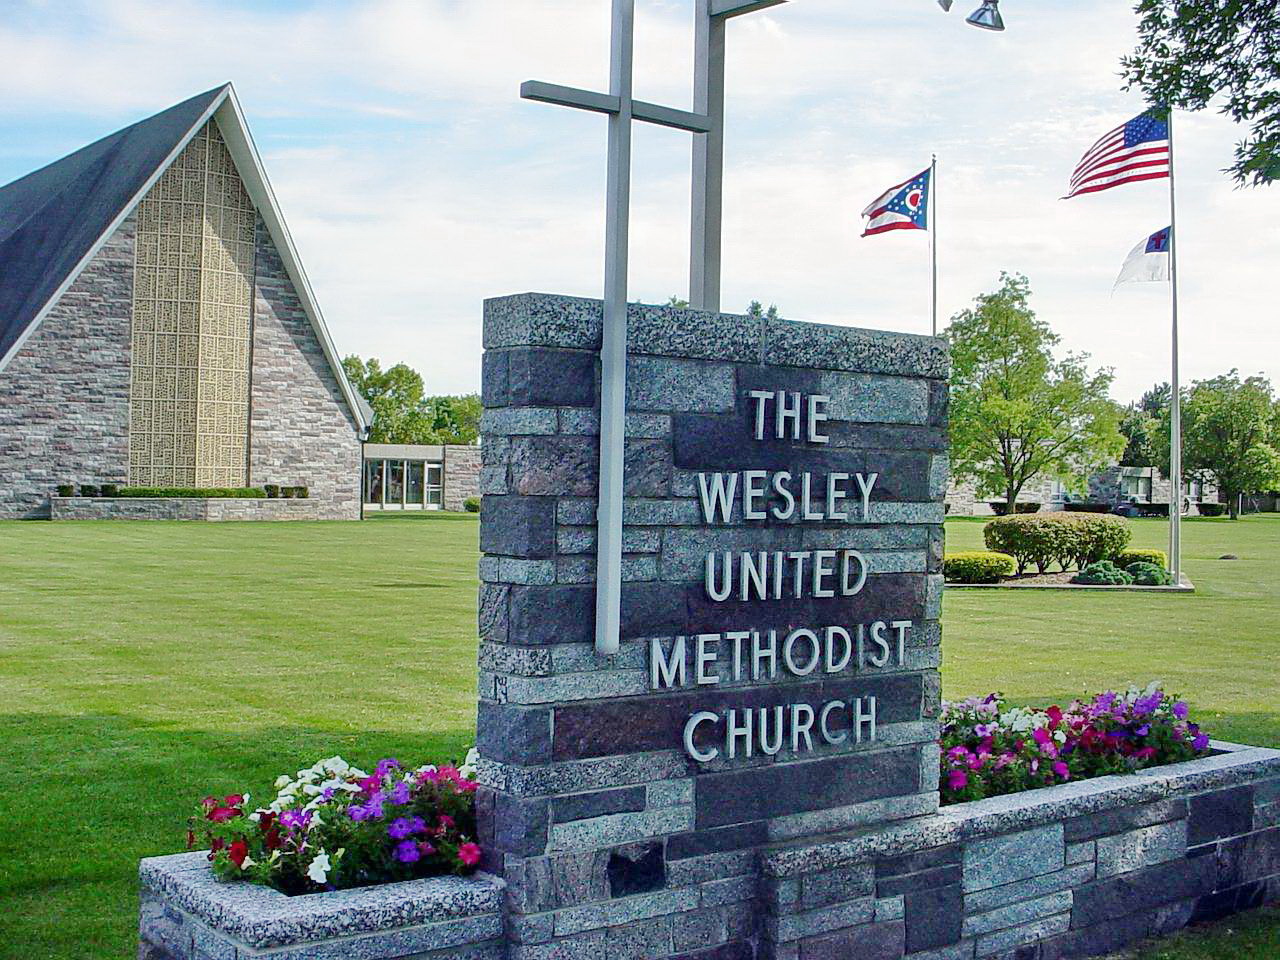 Wesley United Methodist Church 903 Center St., Bryan, Ohio